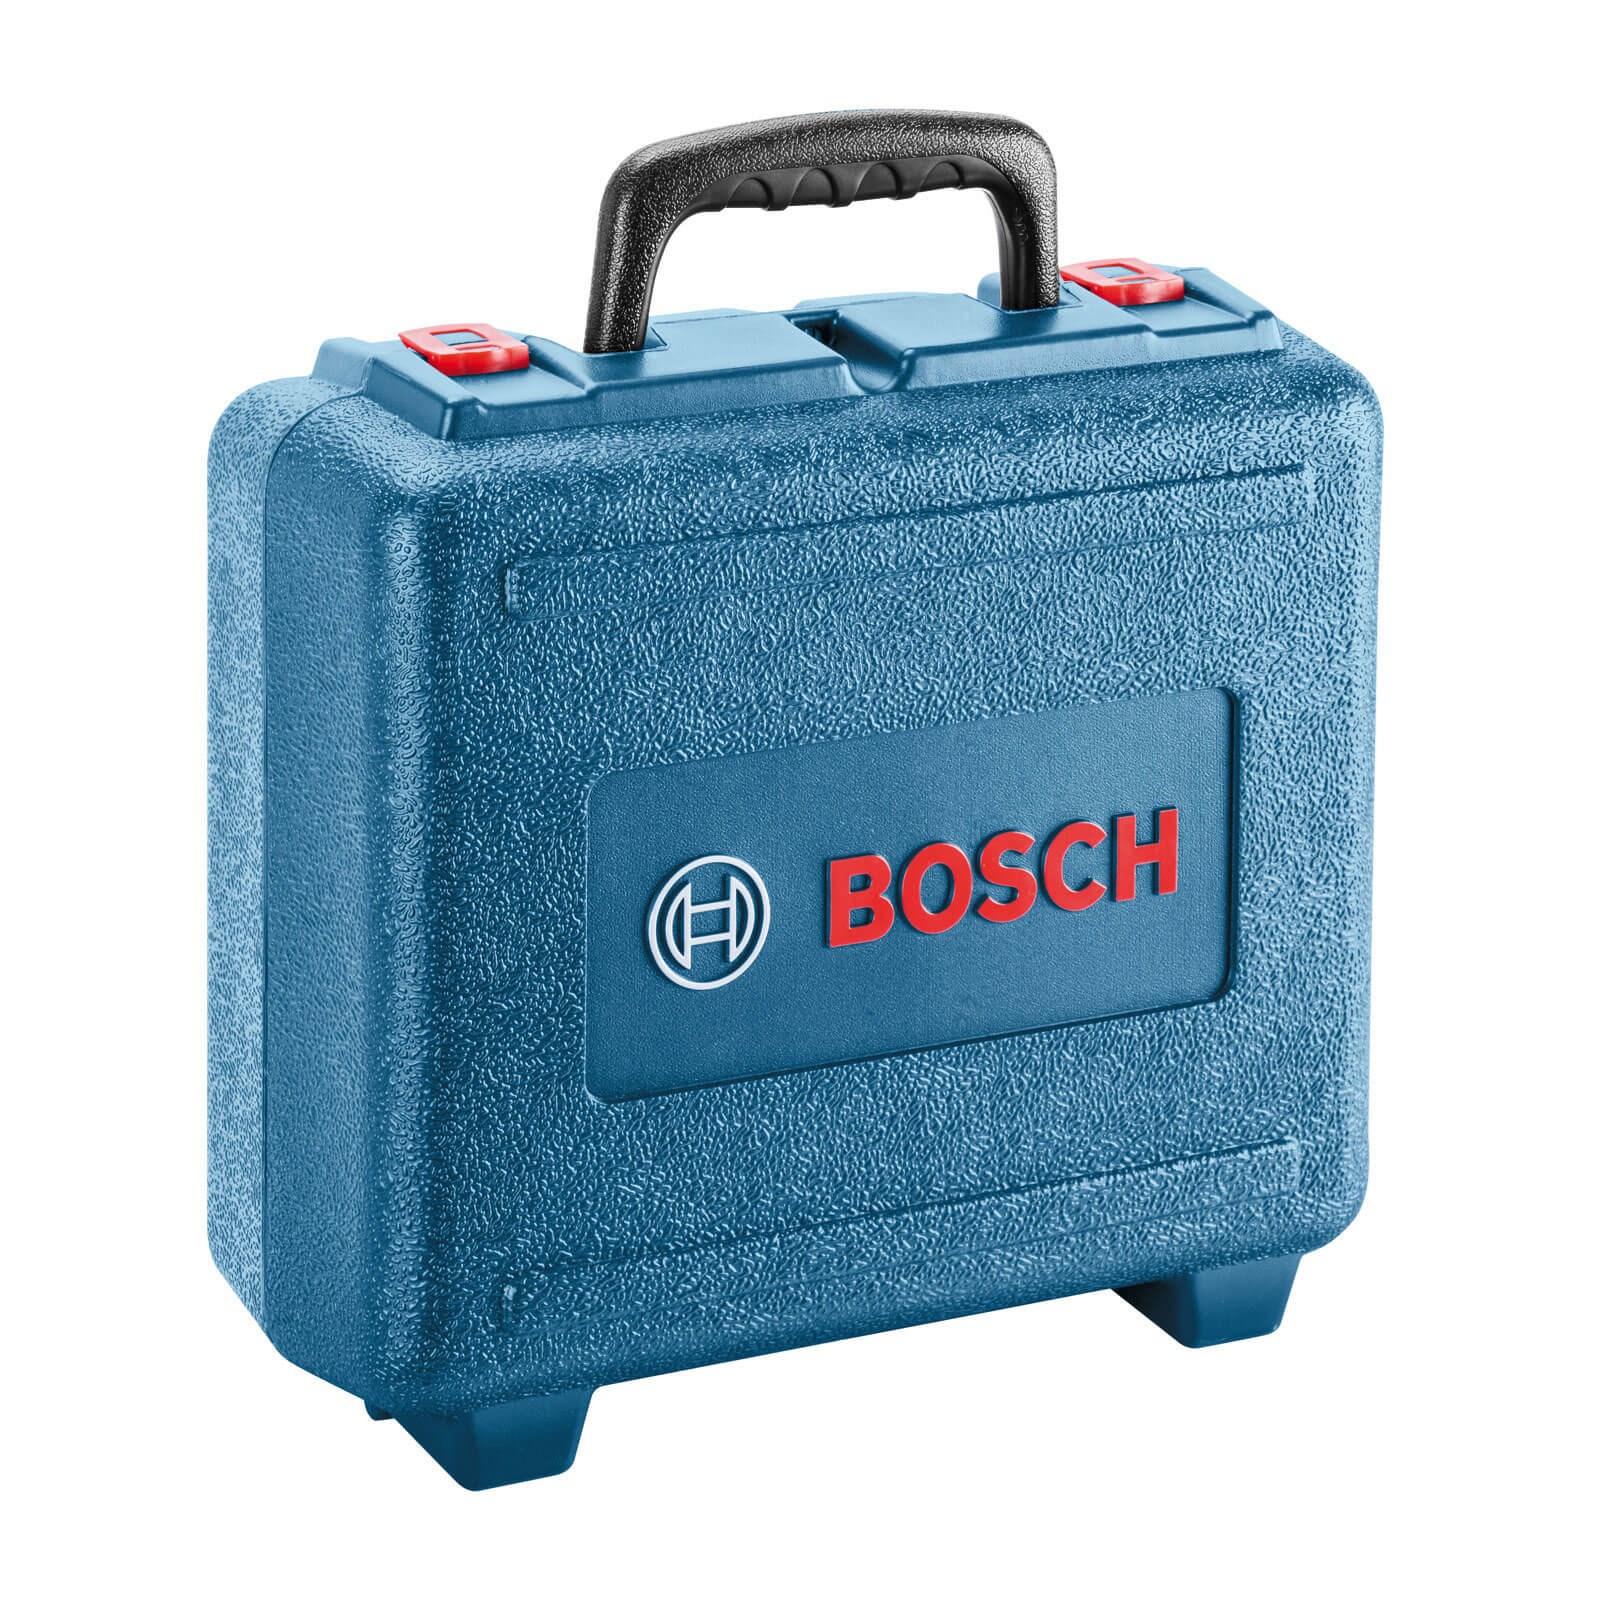 Buy online Bosch Professional Line Laser Bosch GLL 2-15 Kit+BM3 from GZ  industrial supplies Nigeria